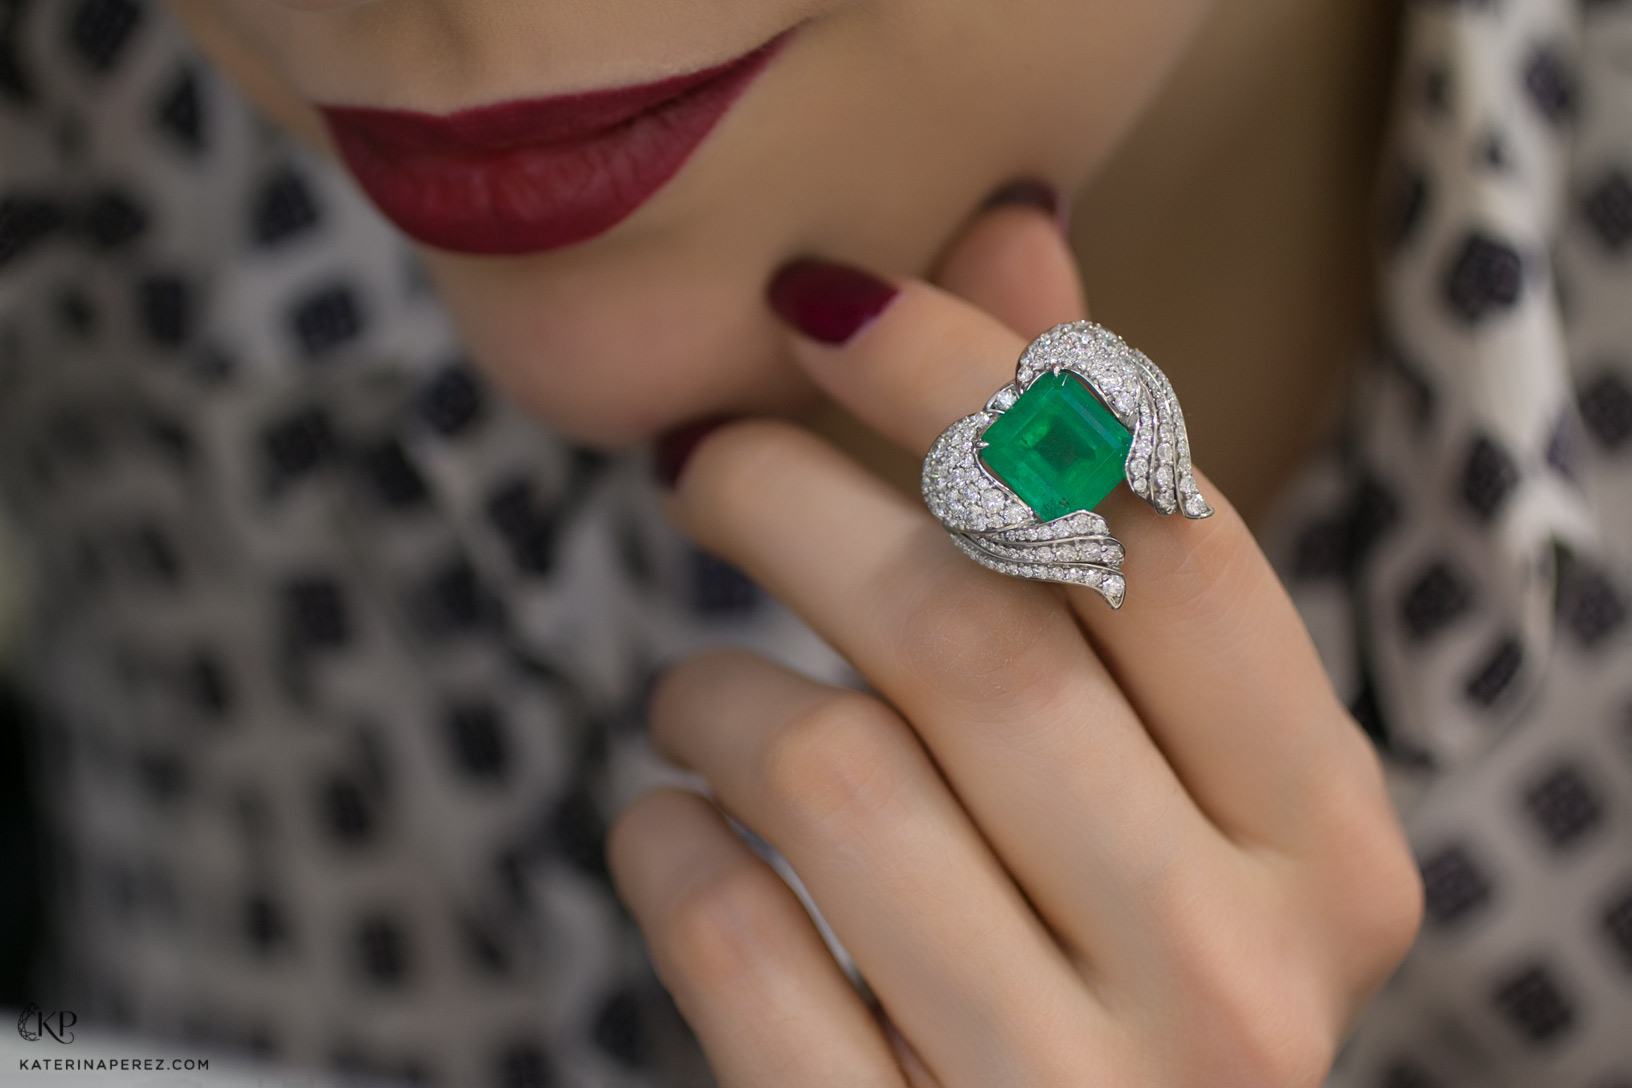 Кольцо «Podnebesnaya and Podnebesny. Pearls and gems» из коллекции "Gems" с изумрудом и бриллиантами